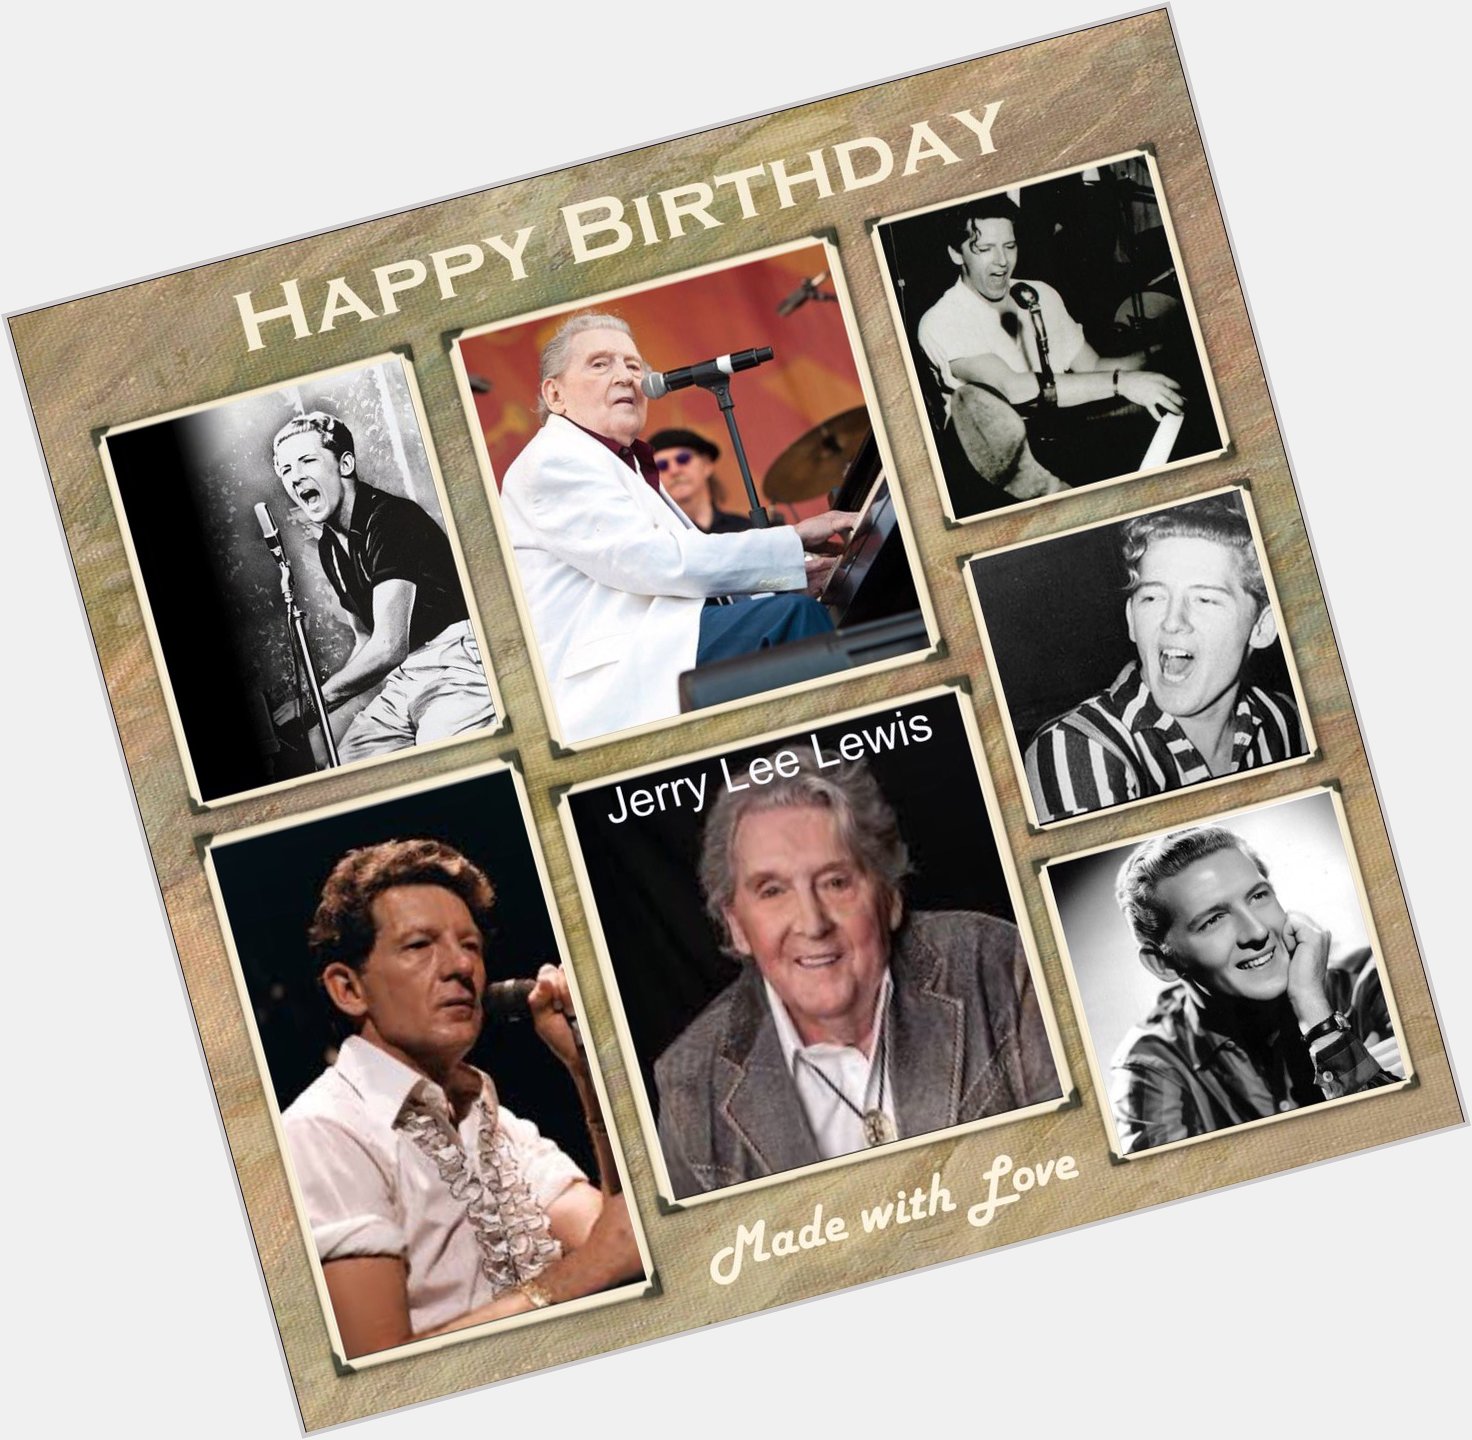 Happy Birthday Jerry Lee Lewis 
September 29, 1935
(83) 